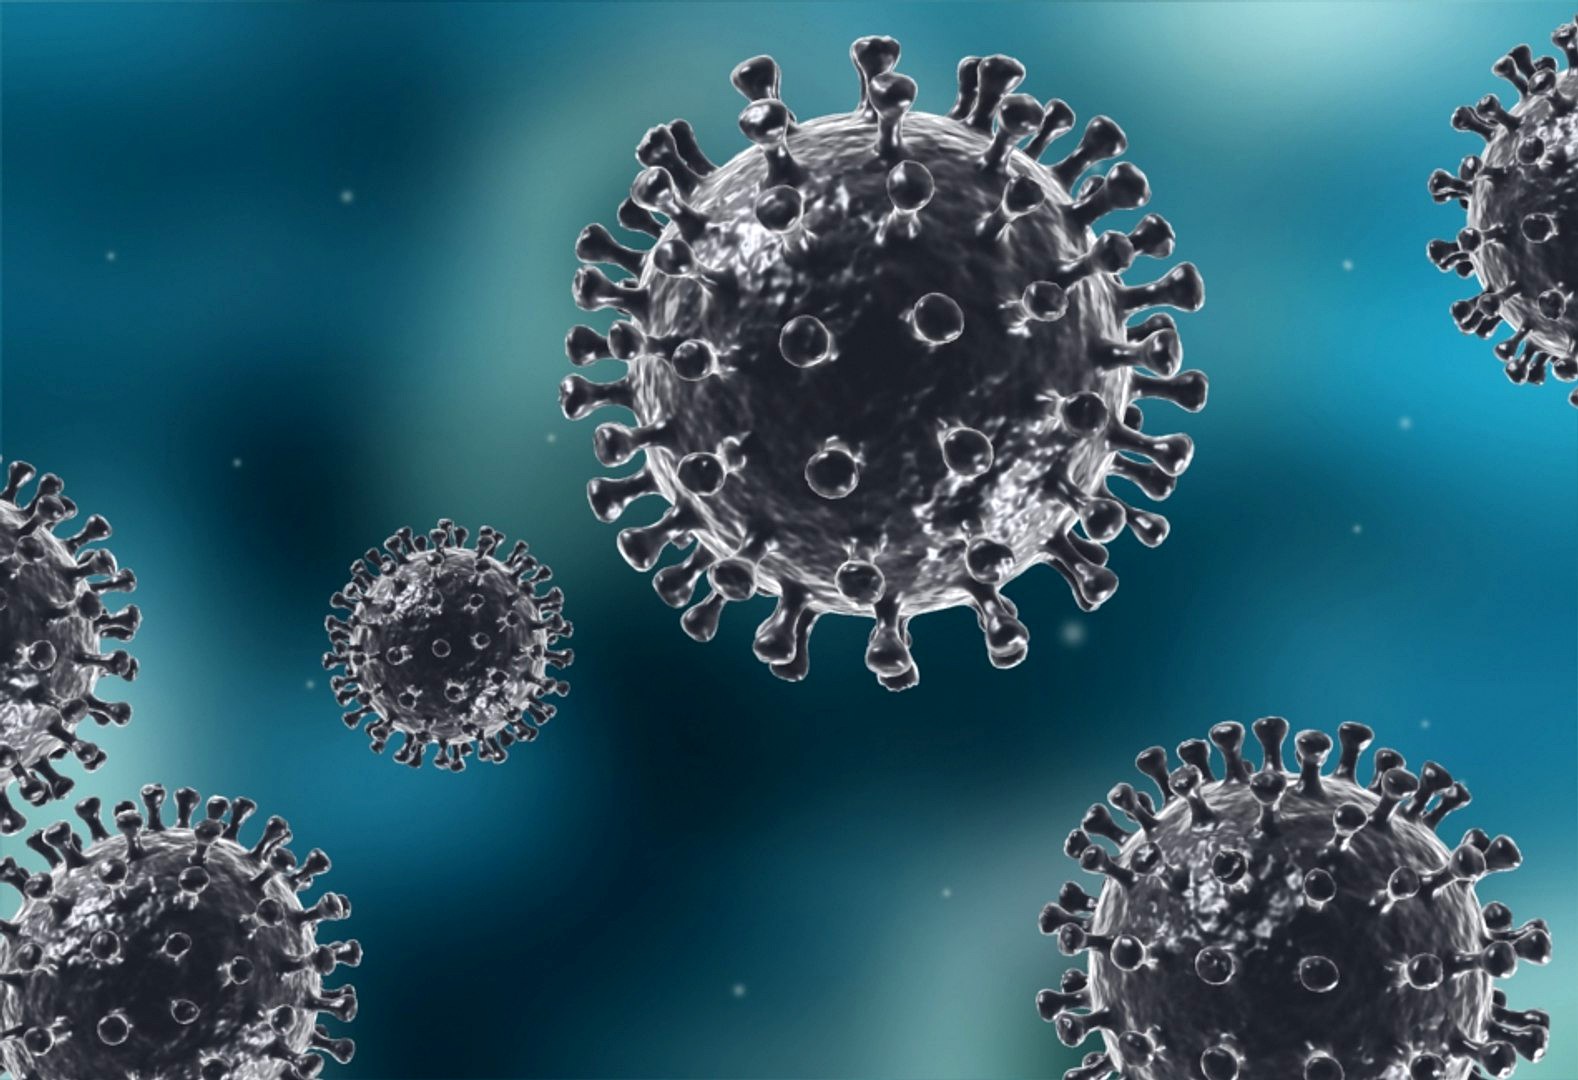 Infectious viruses Bacilli STREPTOCOCCI cellular molecules